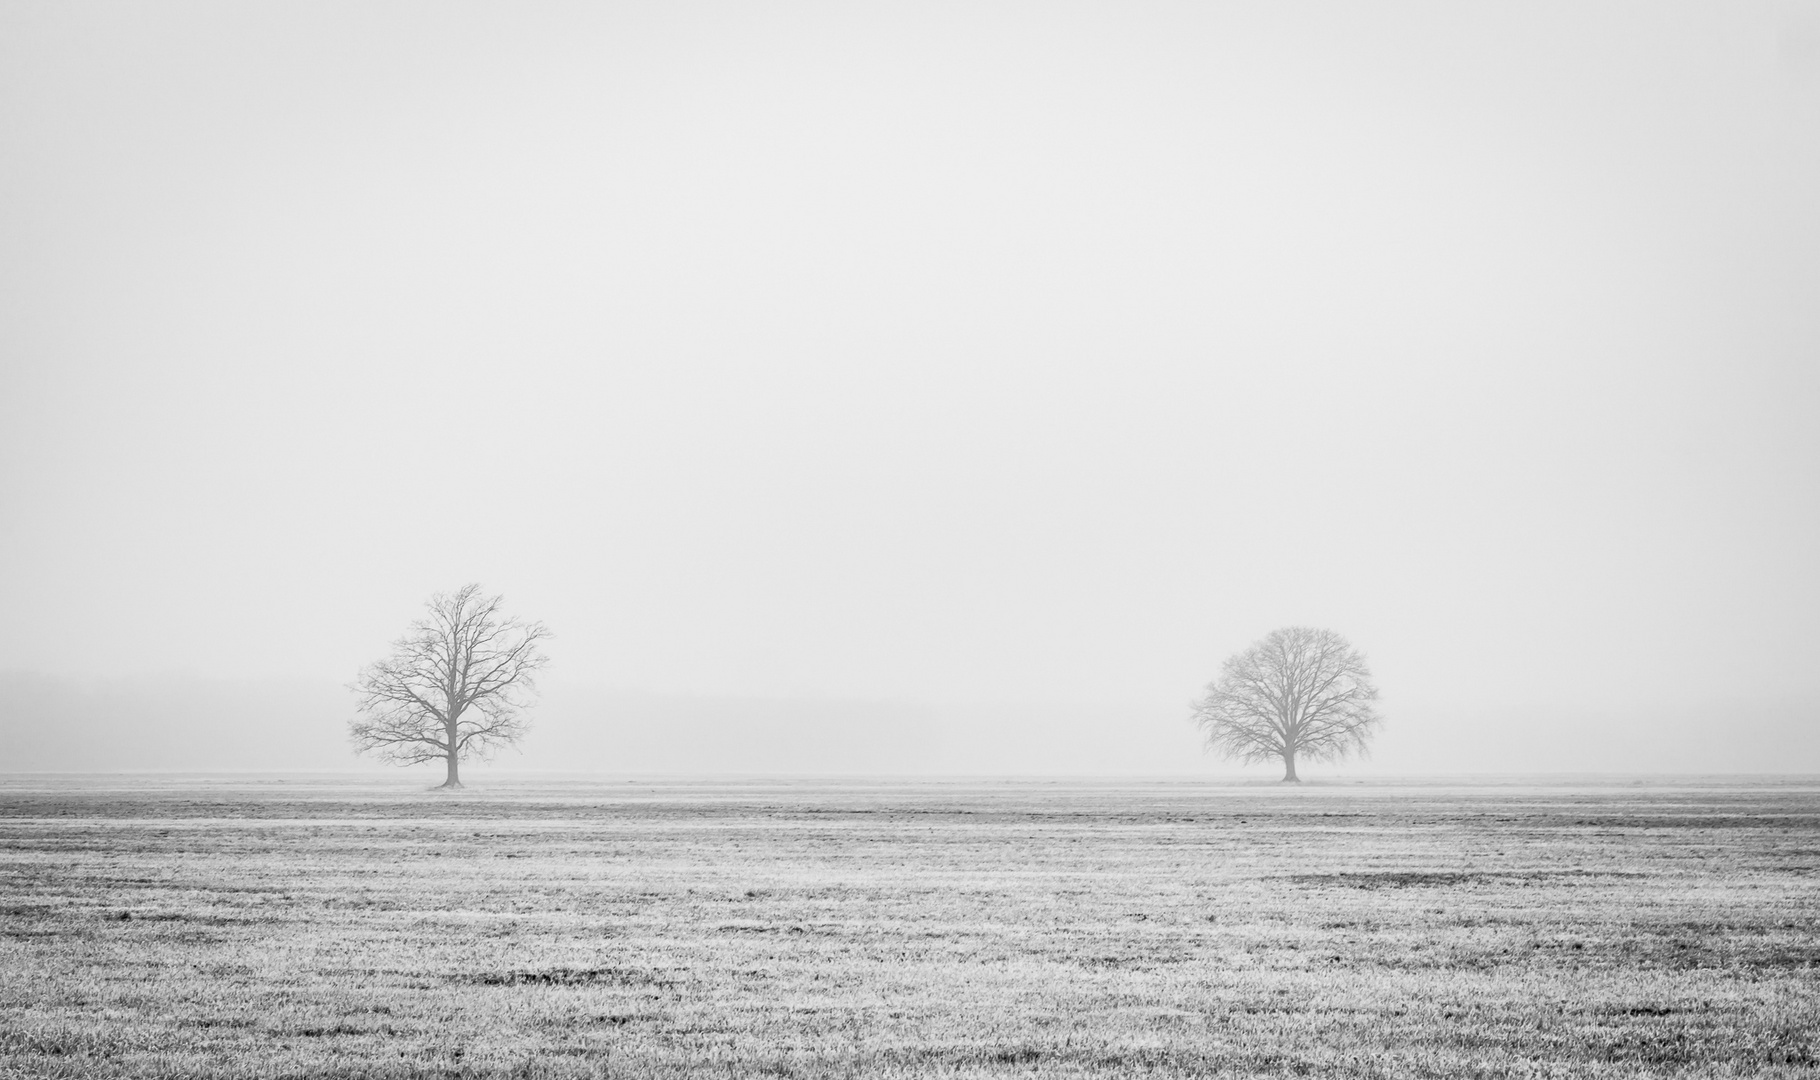 Zwei Bäume im Nebel